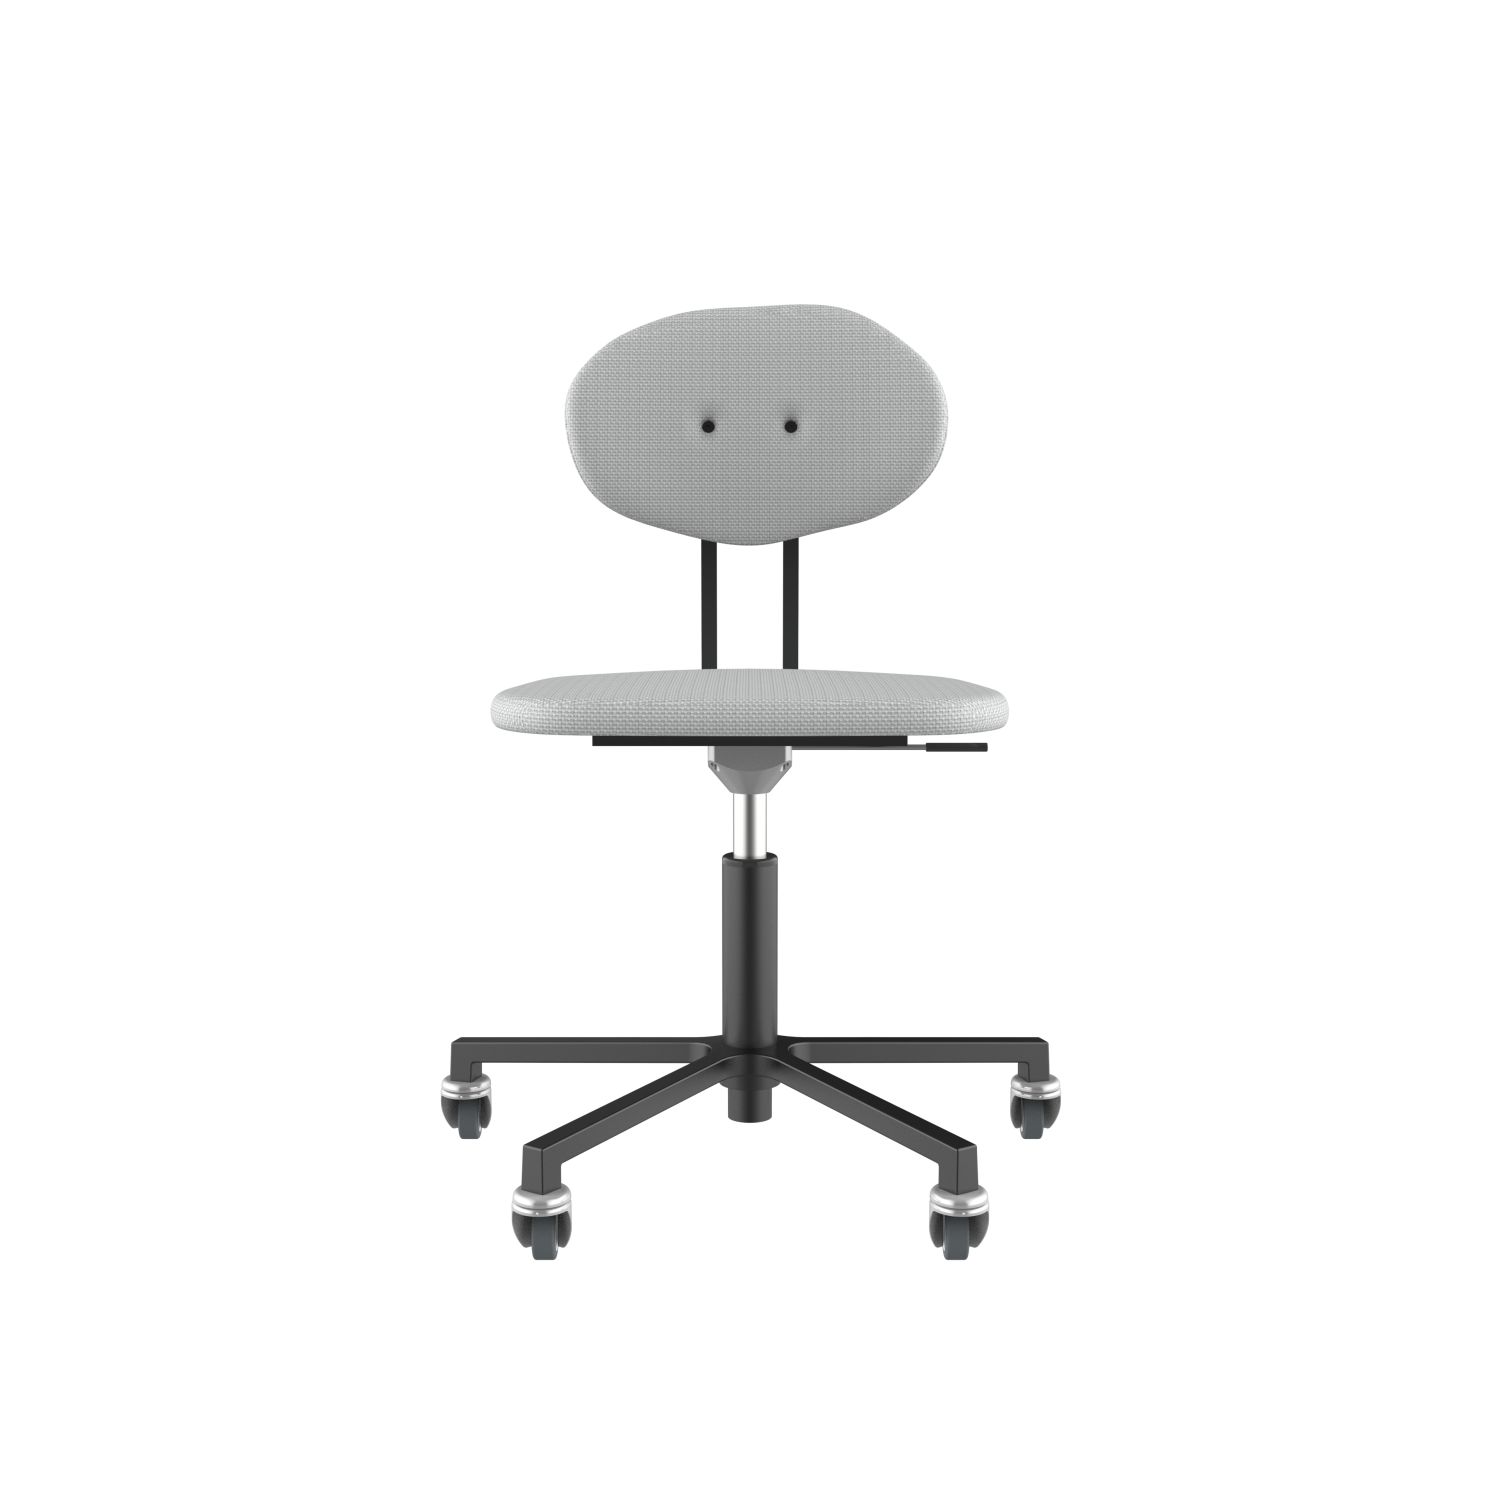 lensvelt maarten baas office chair without armrests backrest d breeze light grey 171 black ral9005 soft wheels